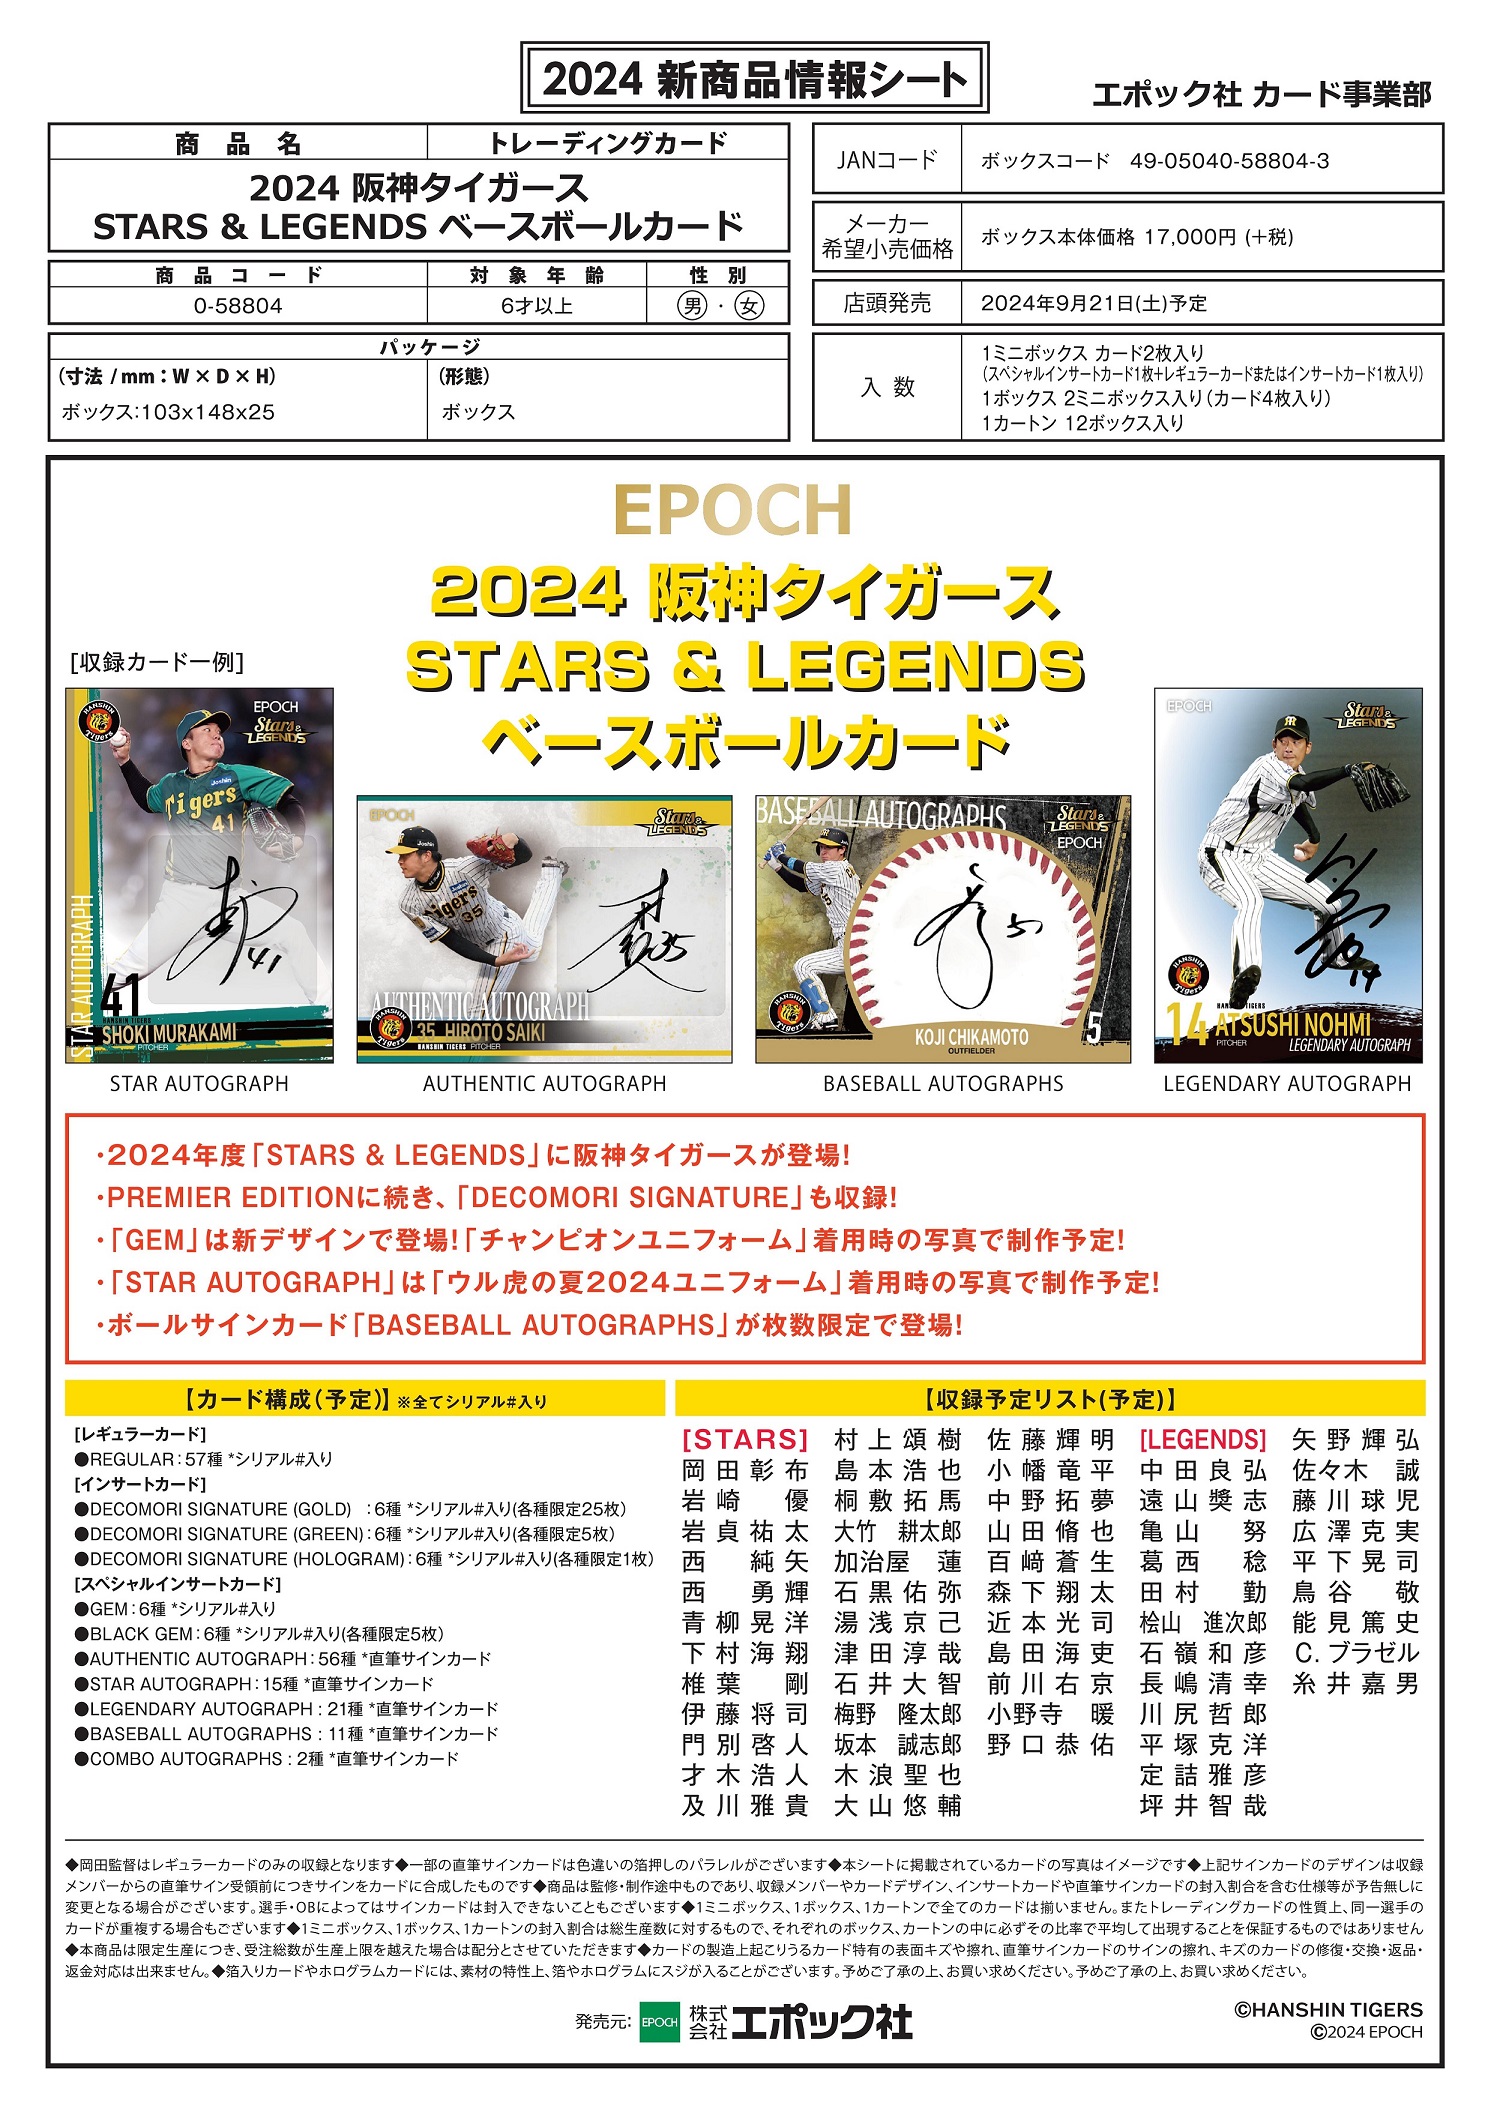 ⚾ EPOCH 2024 阪神タイガース STARS u0026 LEGENDS ベースボールカード【製品情報】 | Trading Card Journal